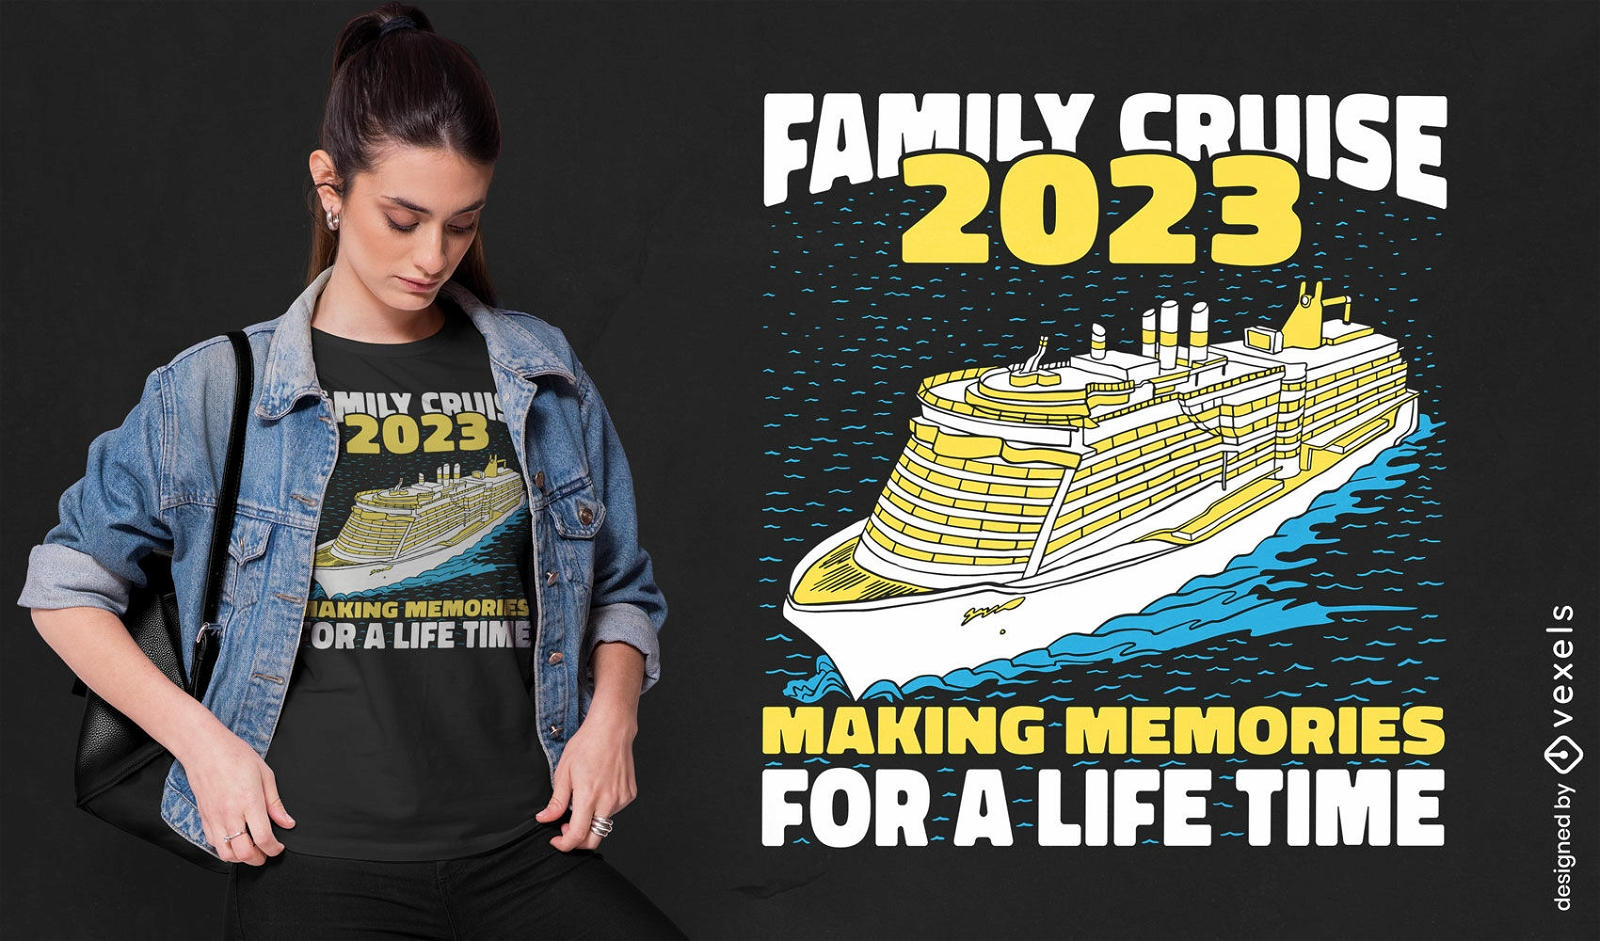 Family cruise trip t-shirt design